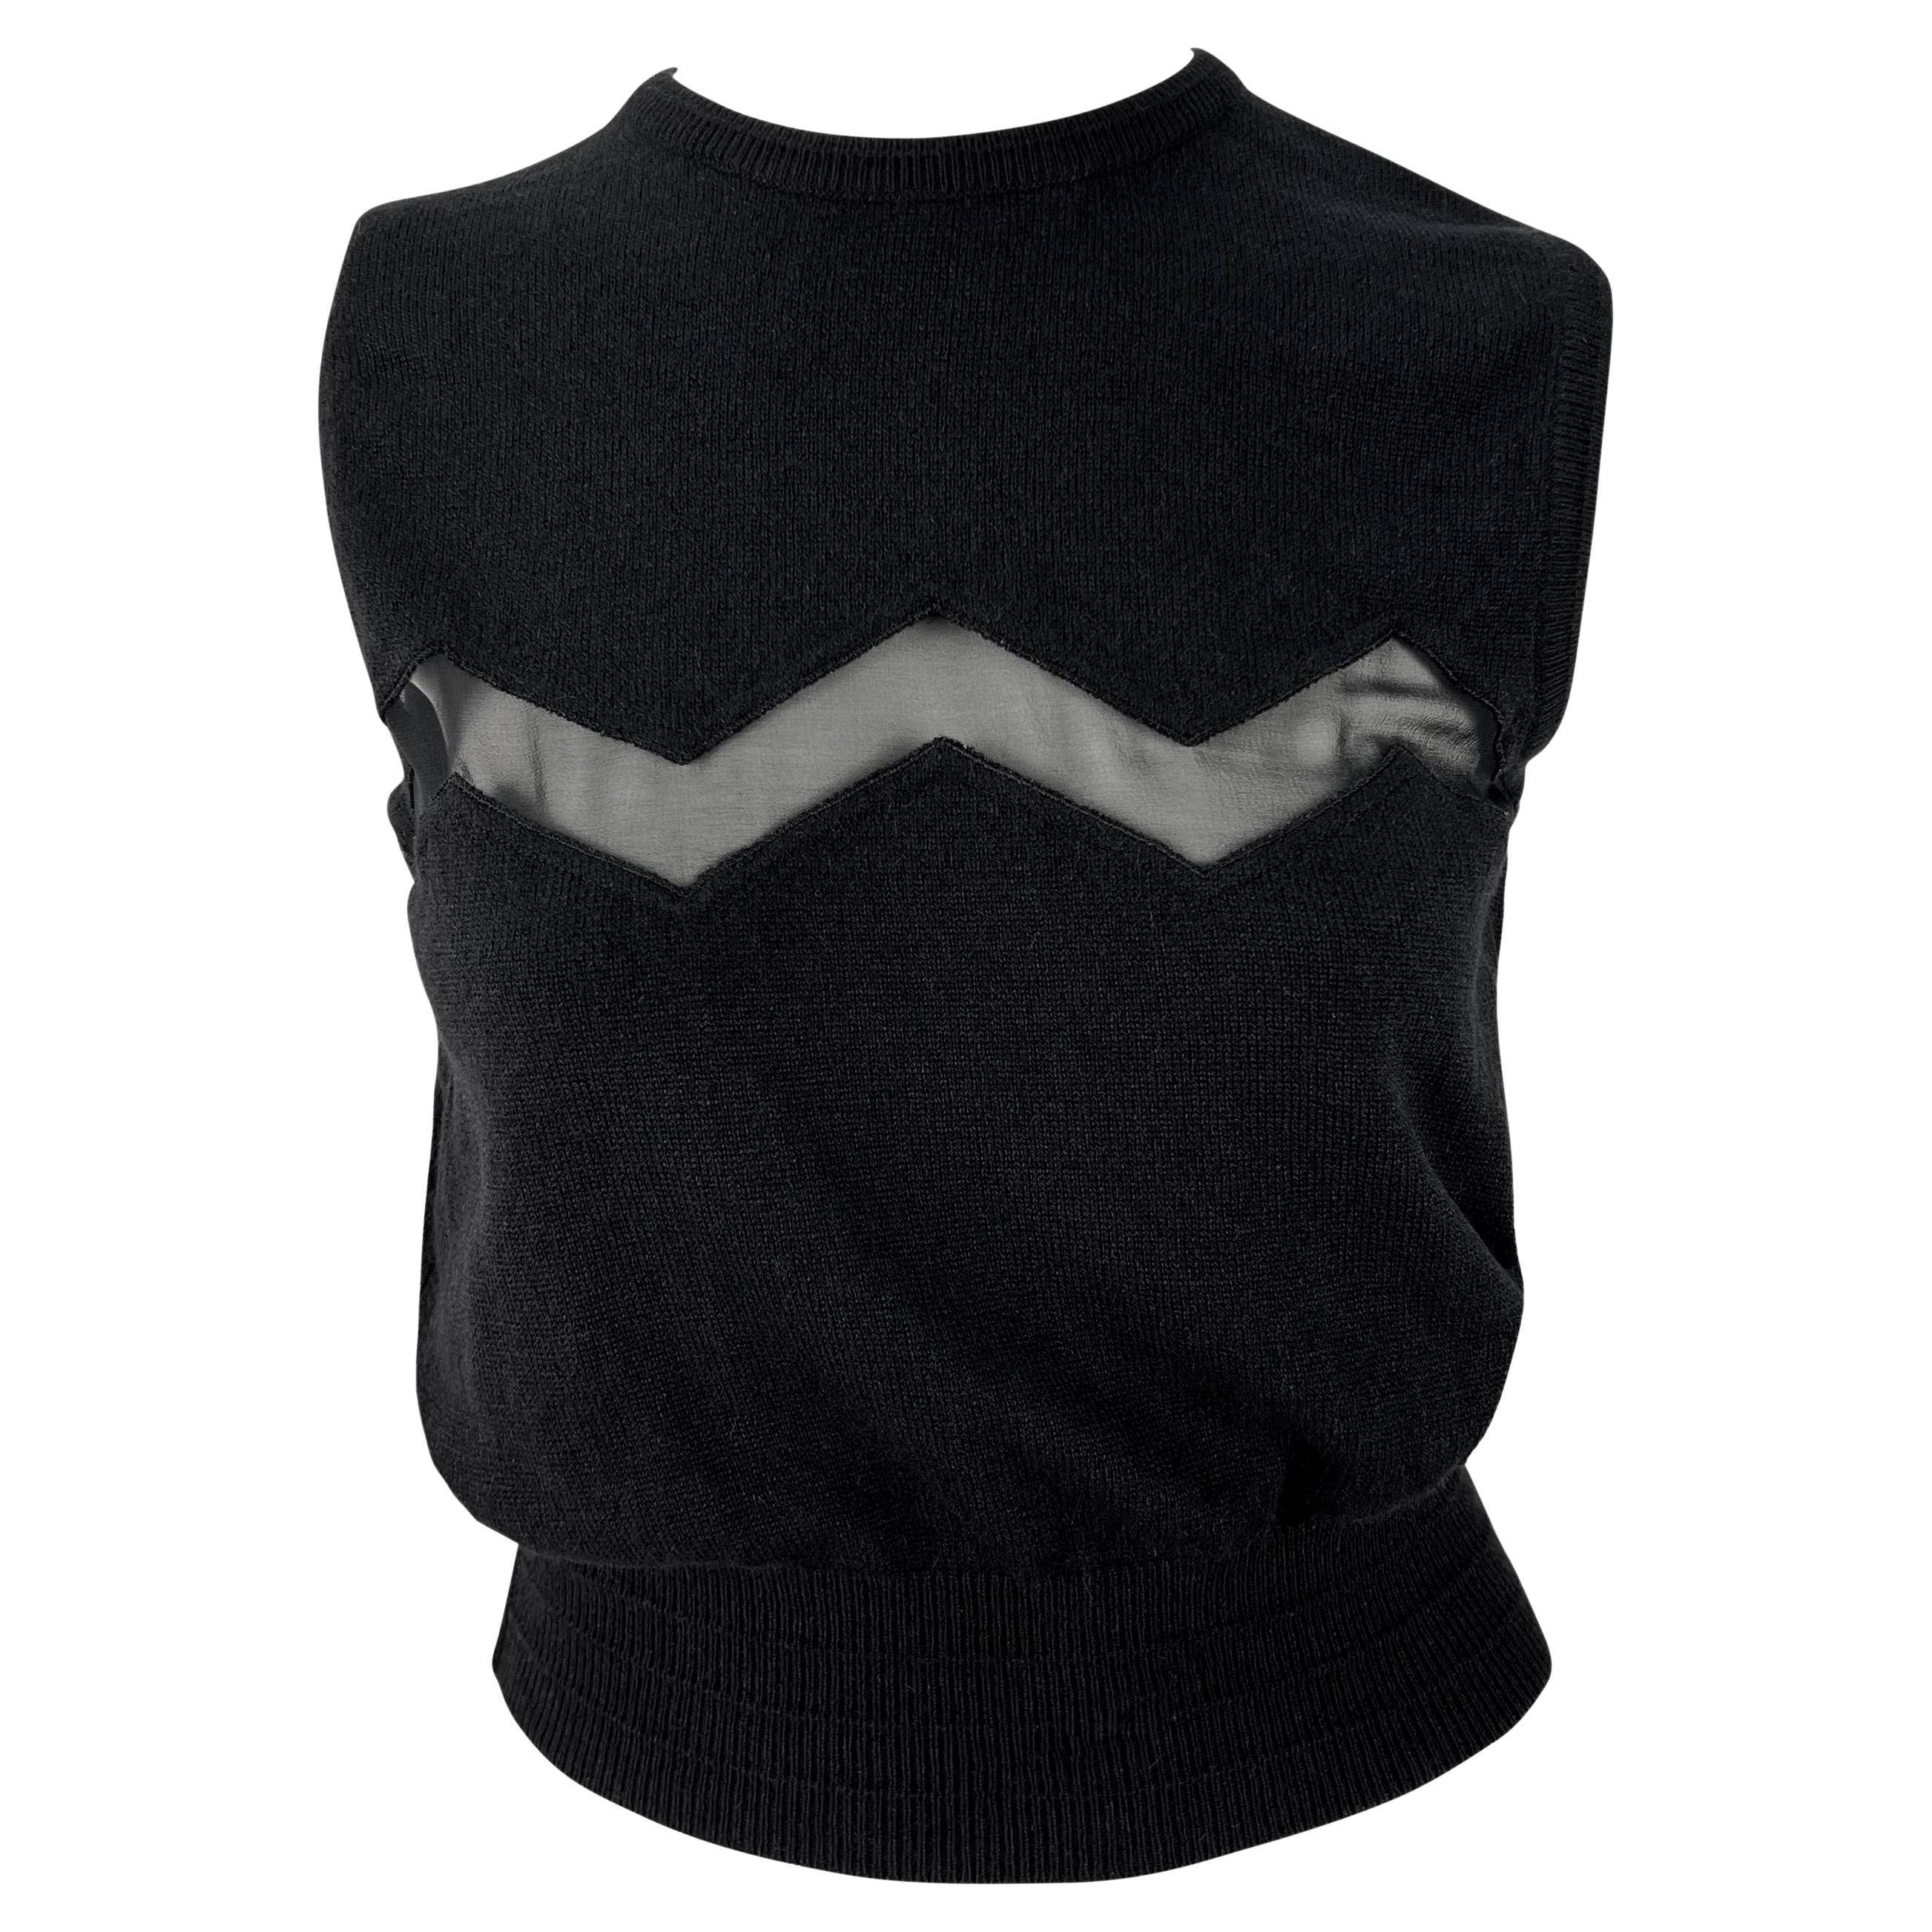 S/S 1994 Gianni Versace Sheer Zig-Zag Panel Black Knit Sweater Vest For Sale